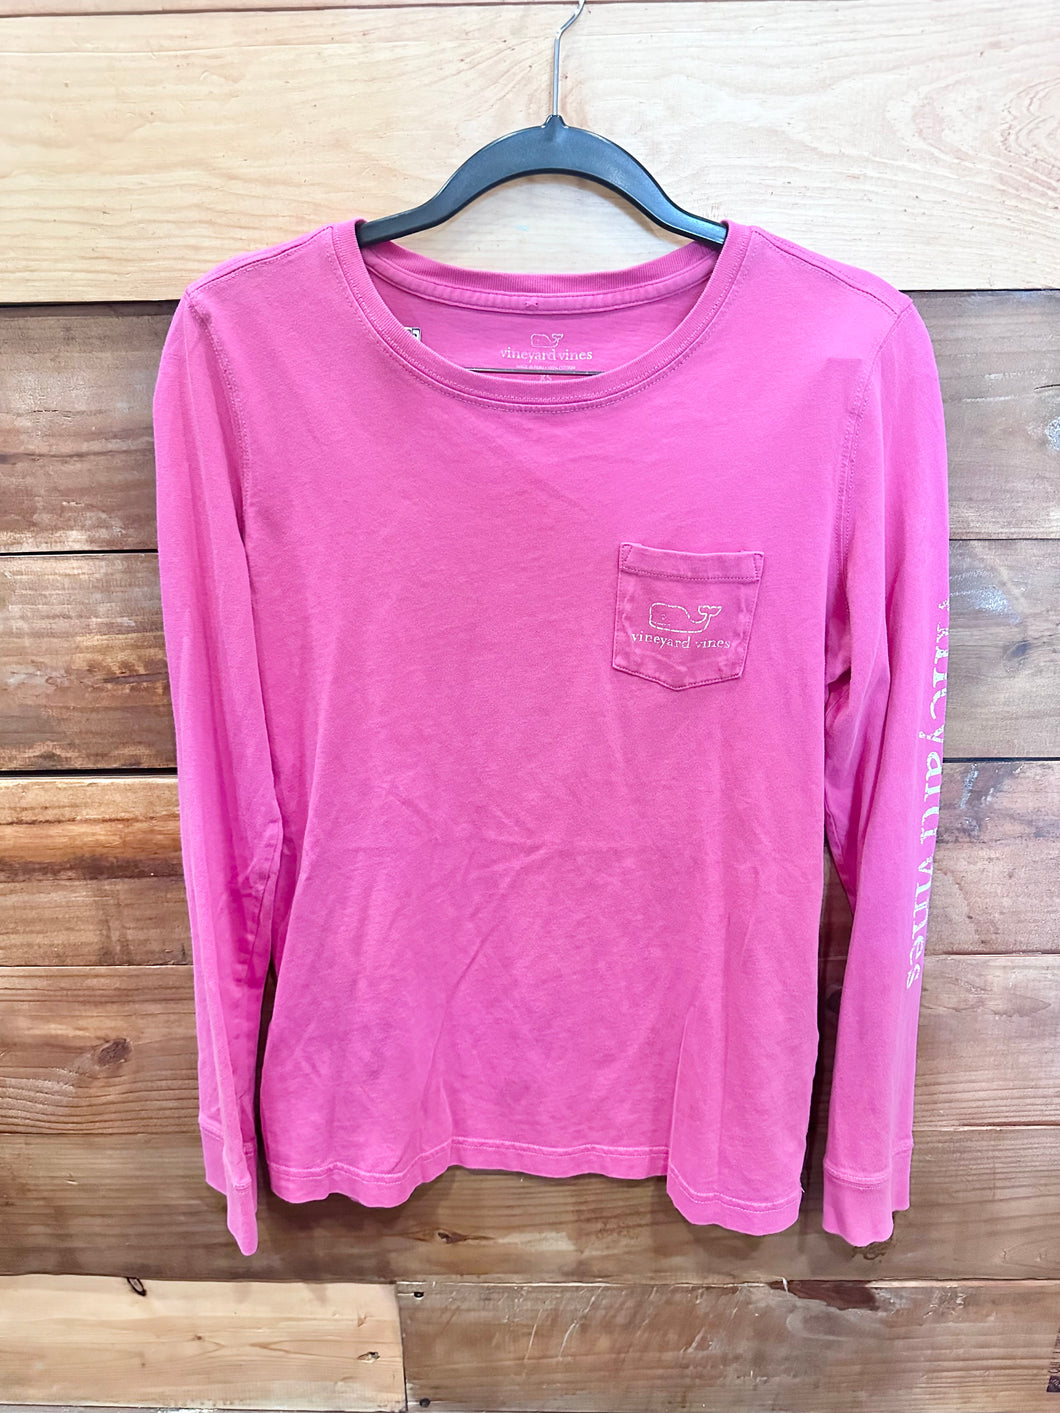 Vineyard Vines Pink Shirt Size XS